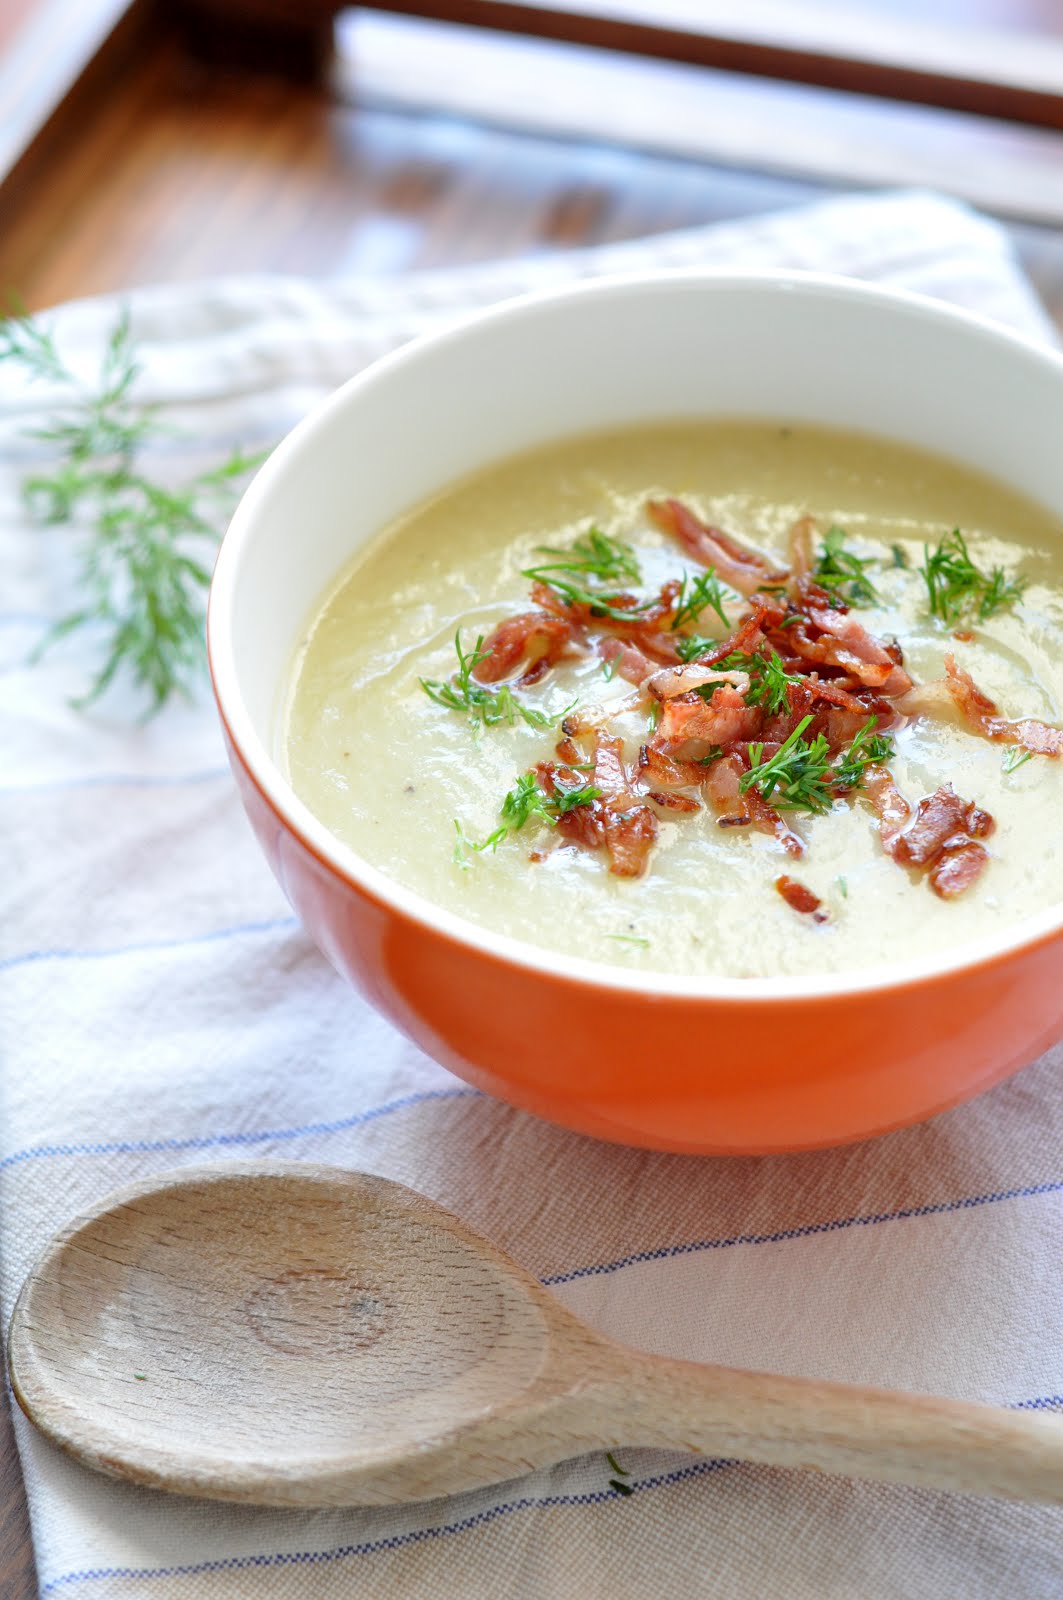 agata's kitchen: Leeks and cauliflower cream soup